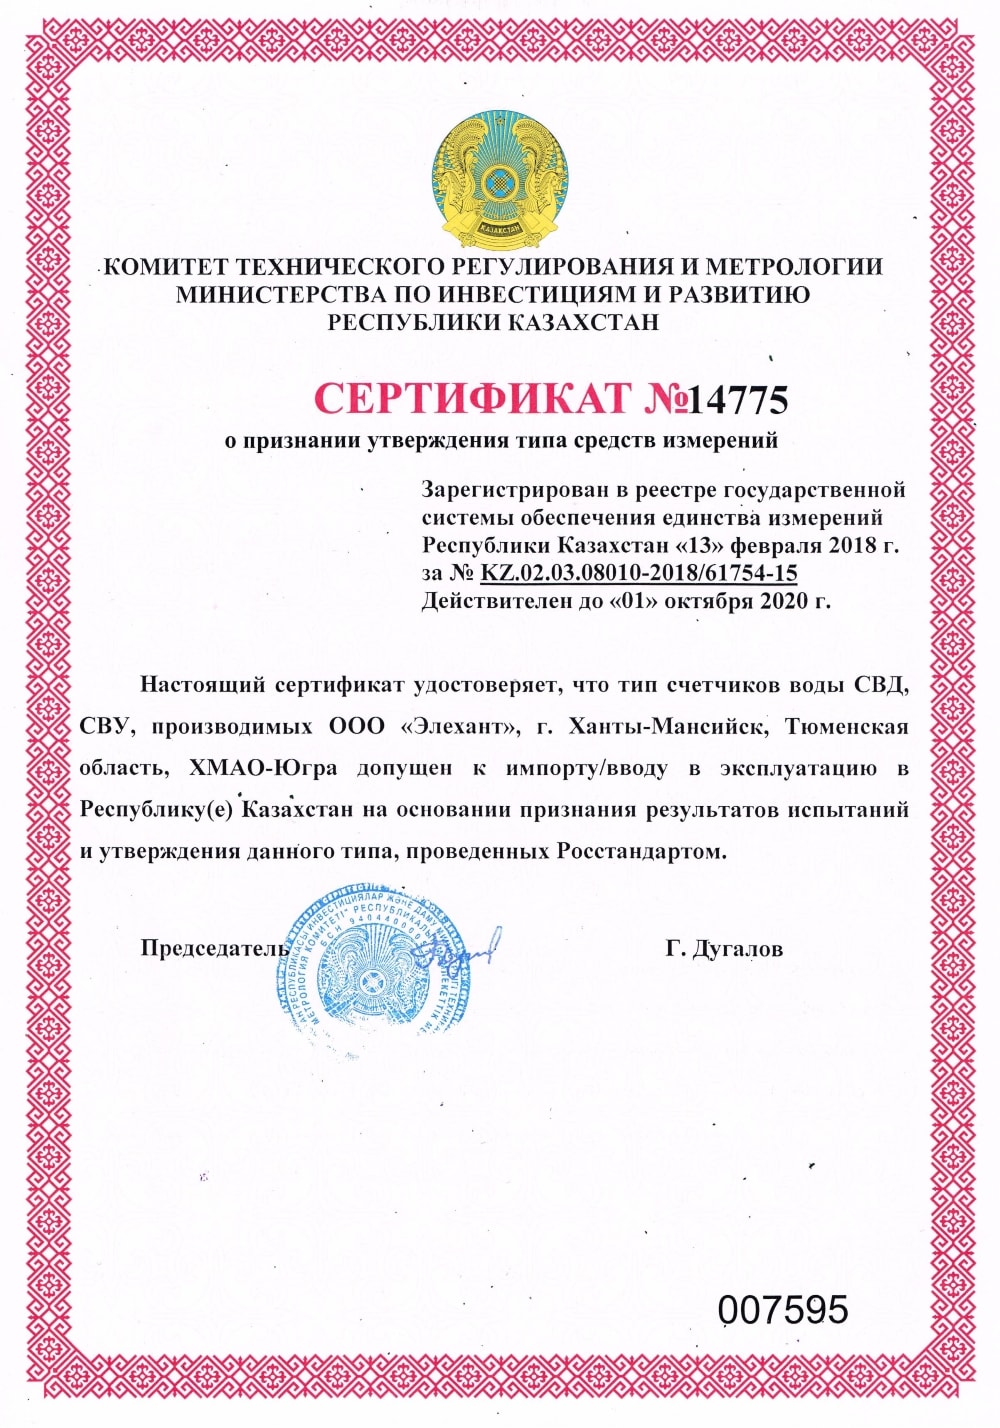 Certificate of approval of the type SVD, SVU in Kazakhstan